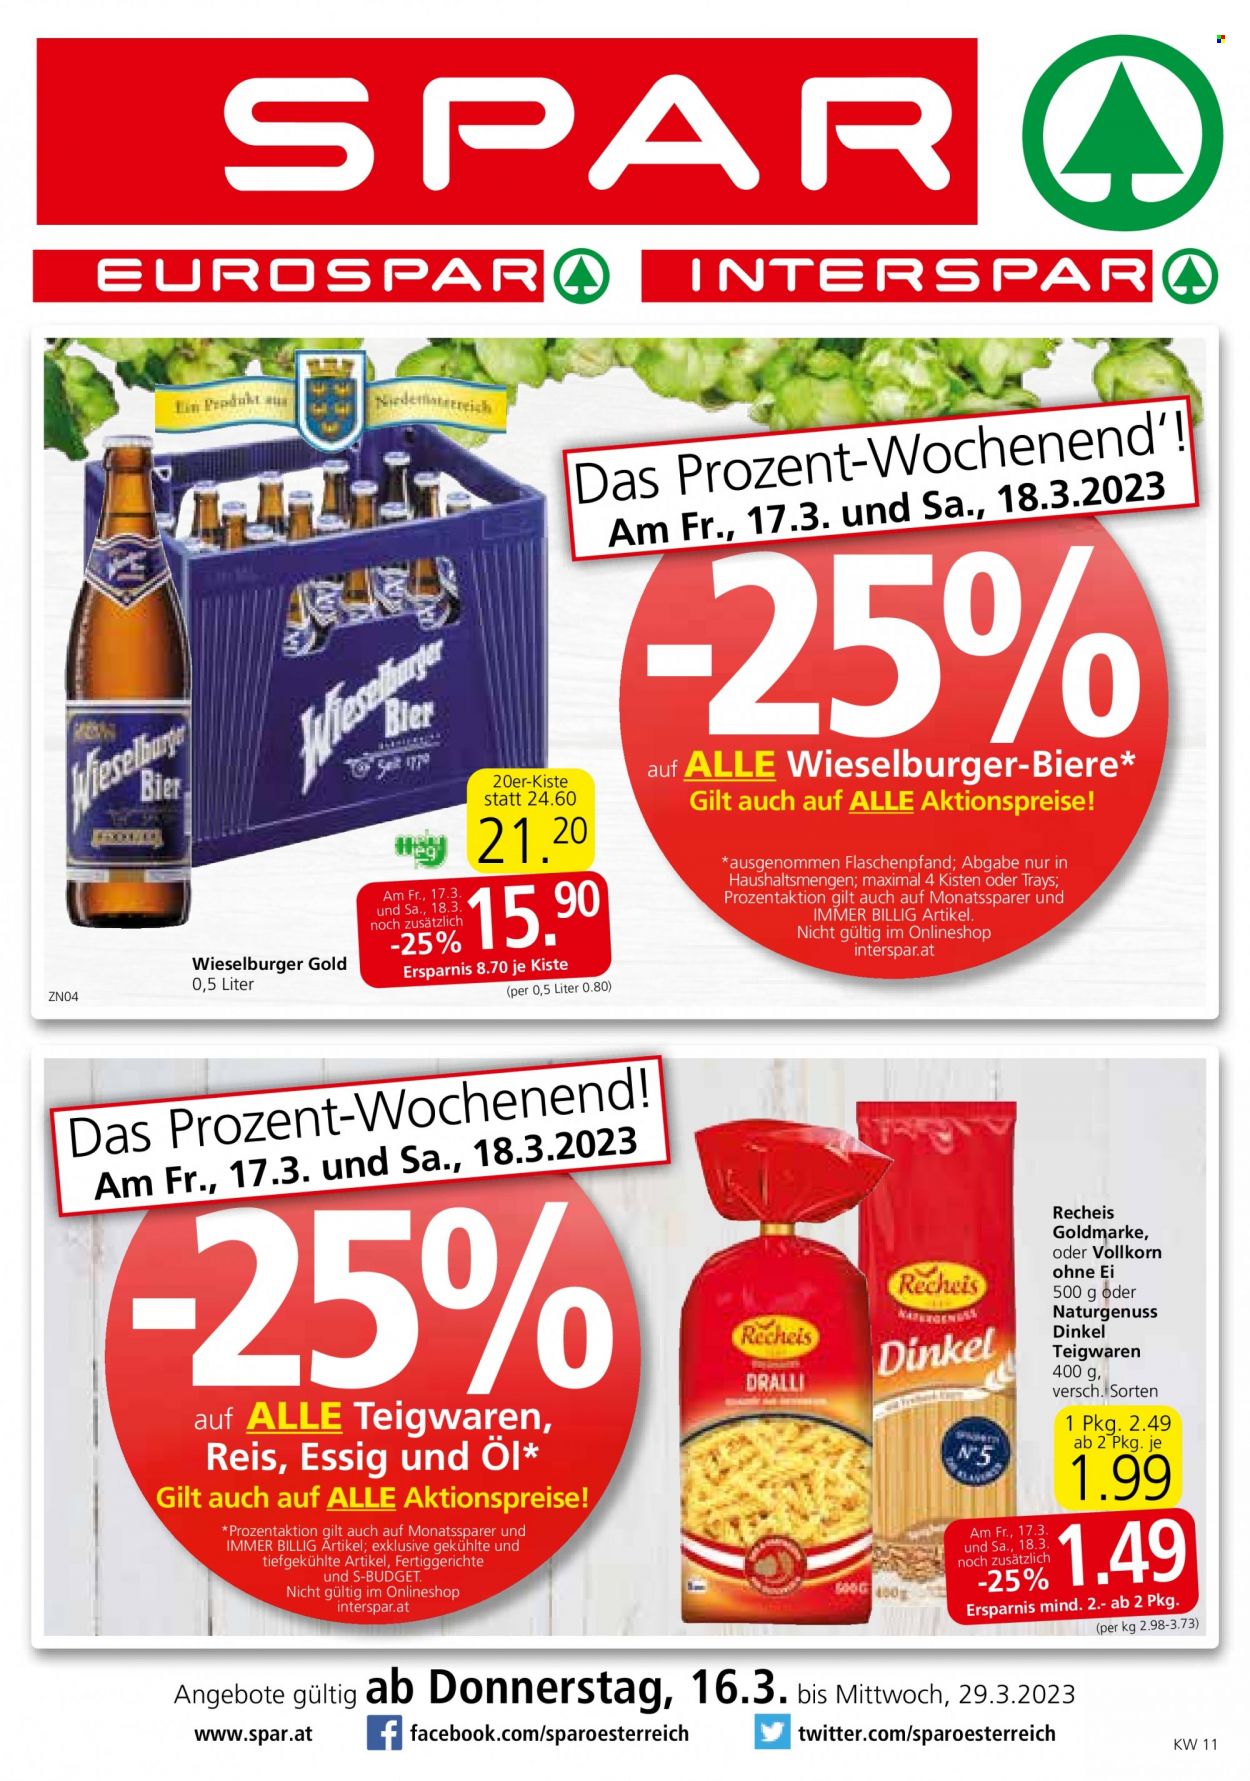 Angebote SPAR - 16.3.2023 - 29.3.2023 - Verkaufsprodukte - S-BUDGET, fertiges Essen, Reis, Teigwaren, Recheis, Wieselburger Gold, Alkohol, Bier, Wieselburger. Seite 1.